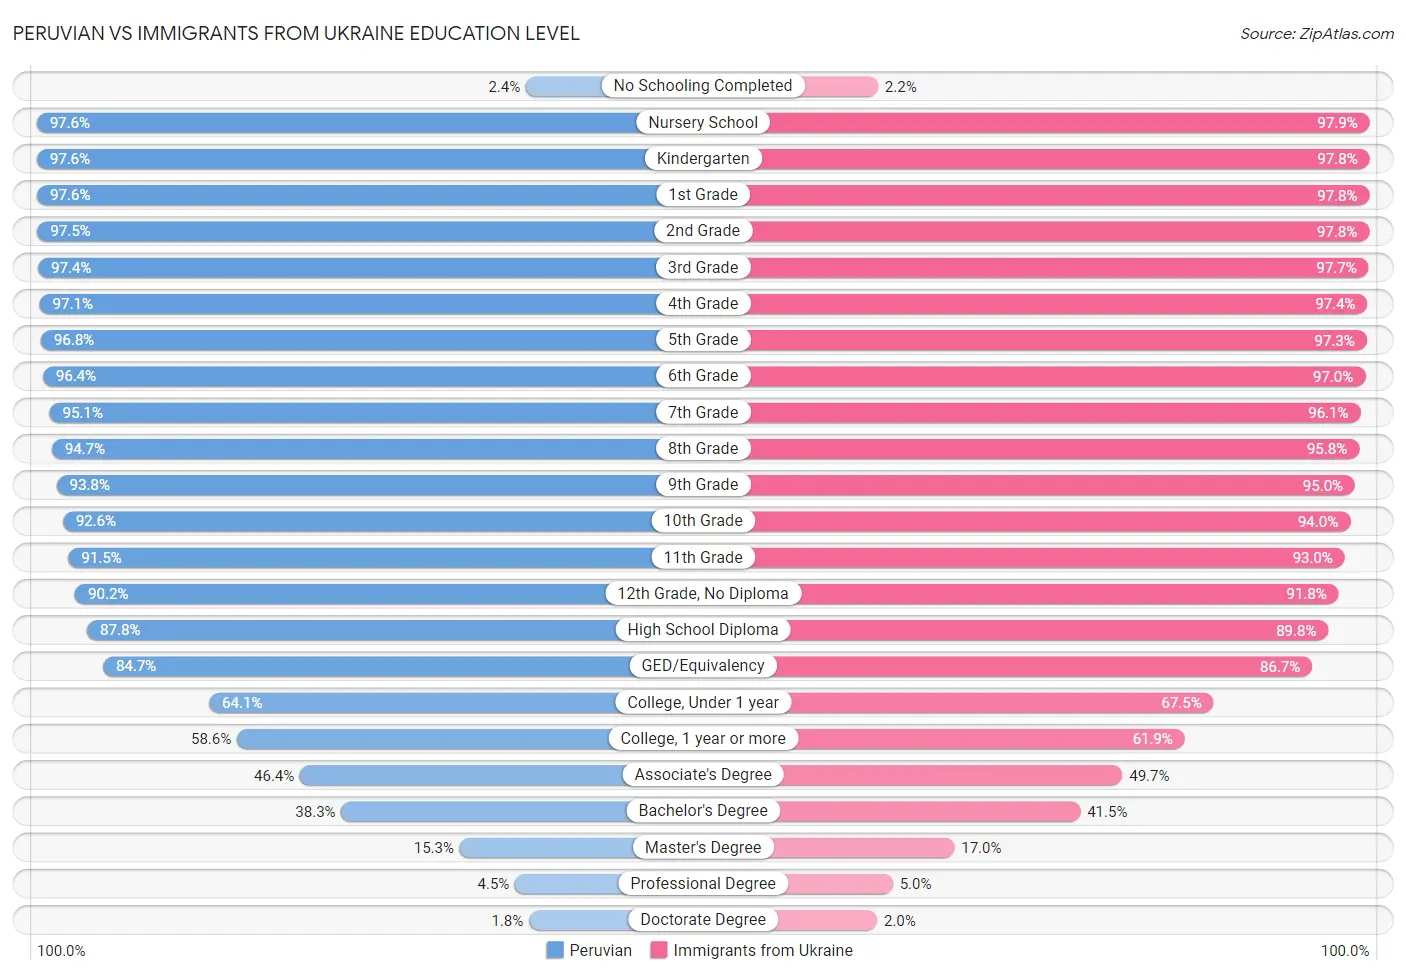 Peruvian vs Immigrants from Ukraine Education Level